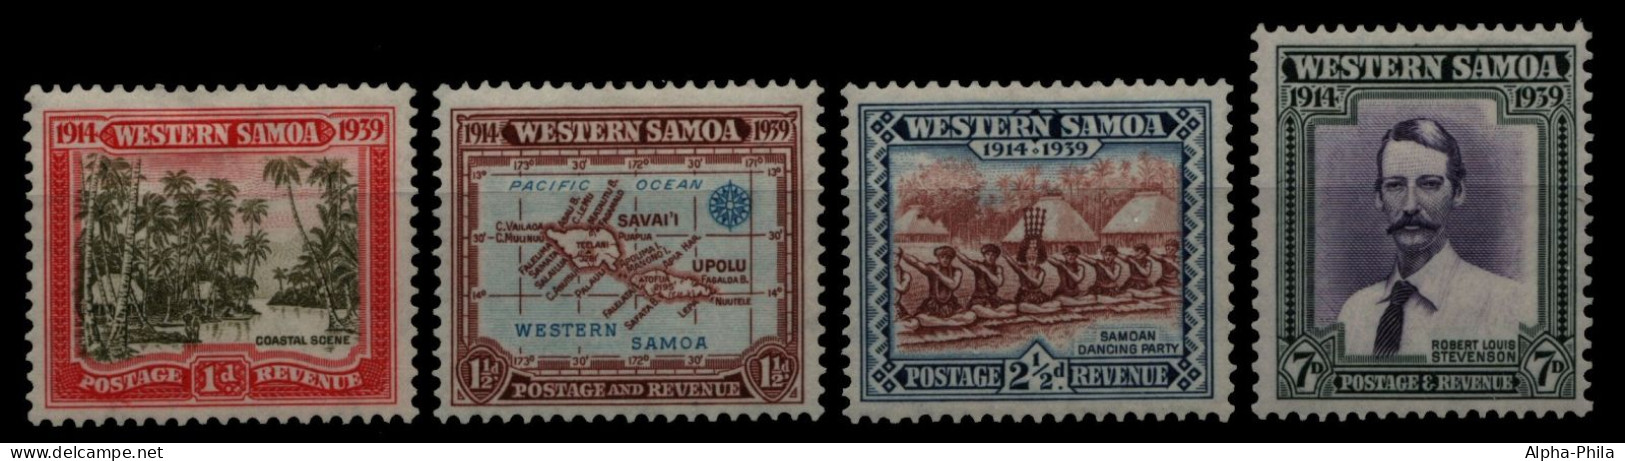 Samoa 1939 - Mi-Nr. 84-87 * - MH - Neuseeländische Herrschaft - Samoa Americana